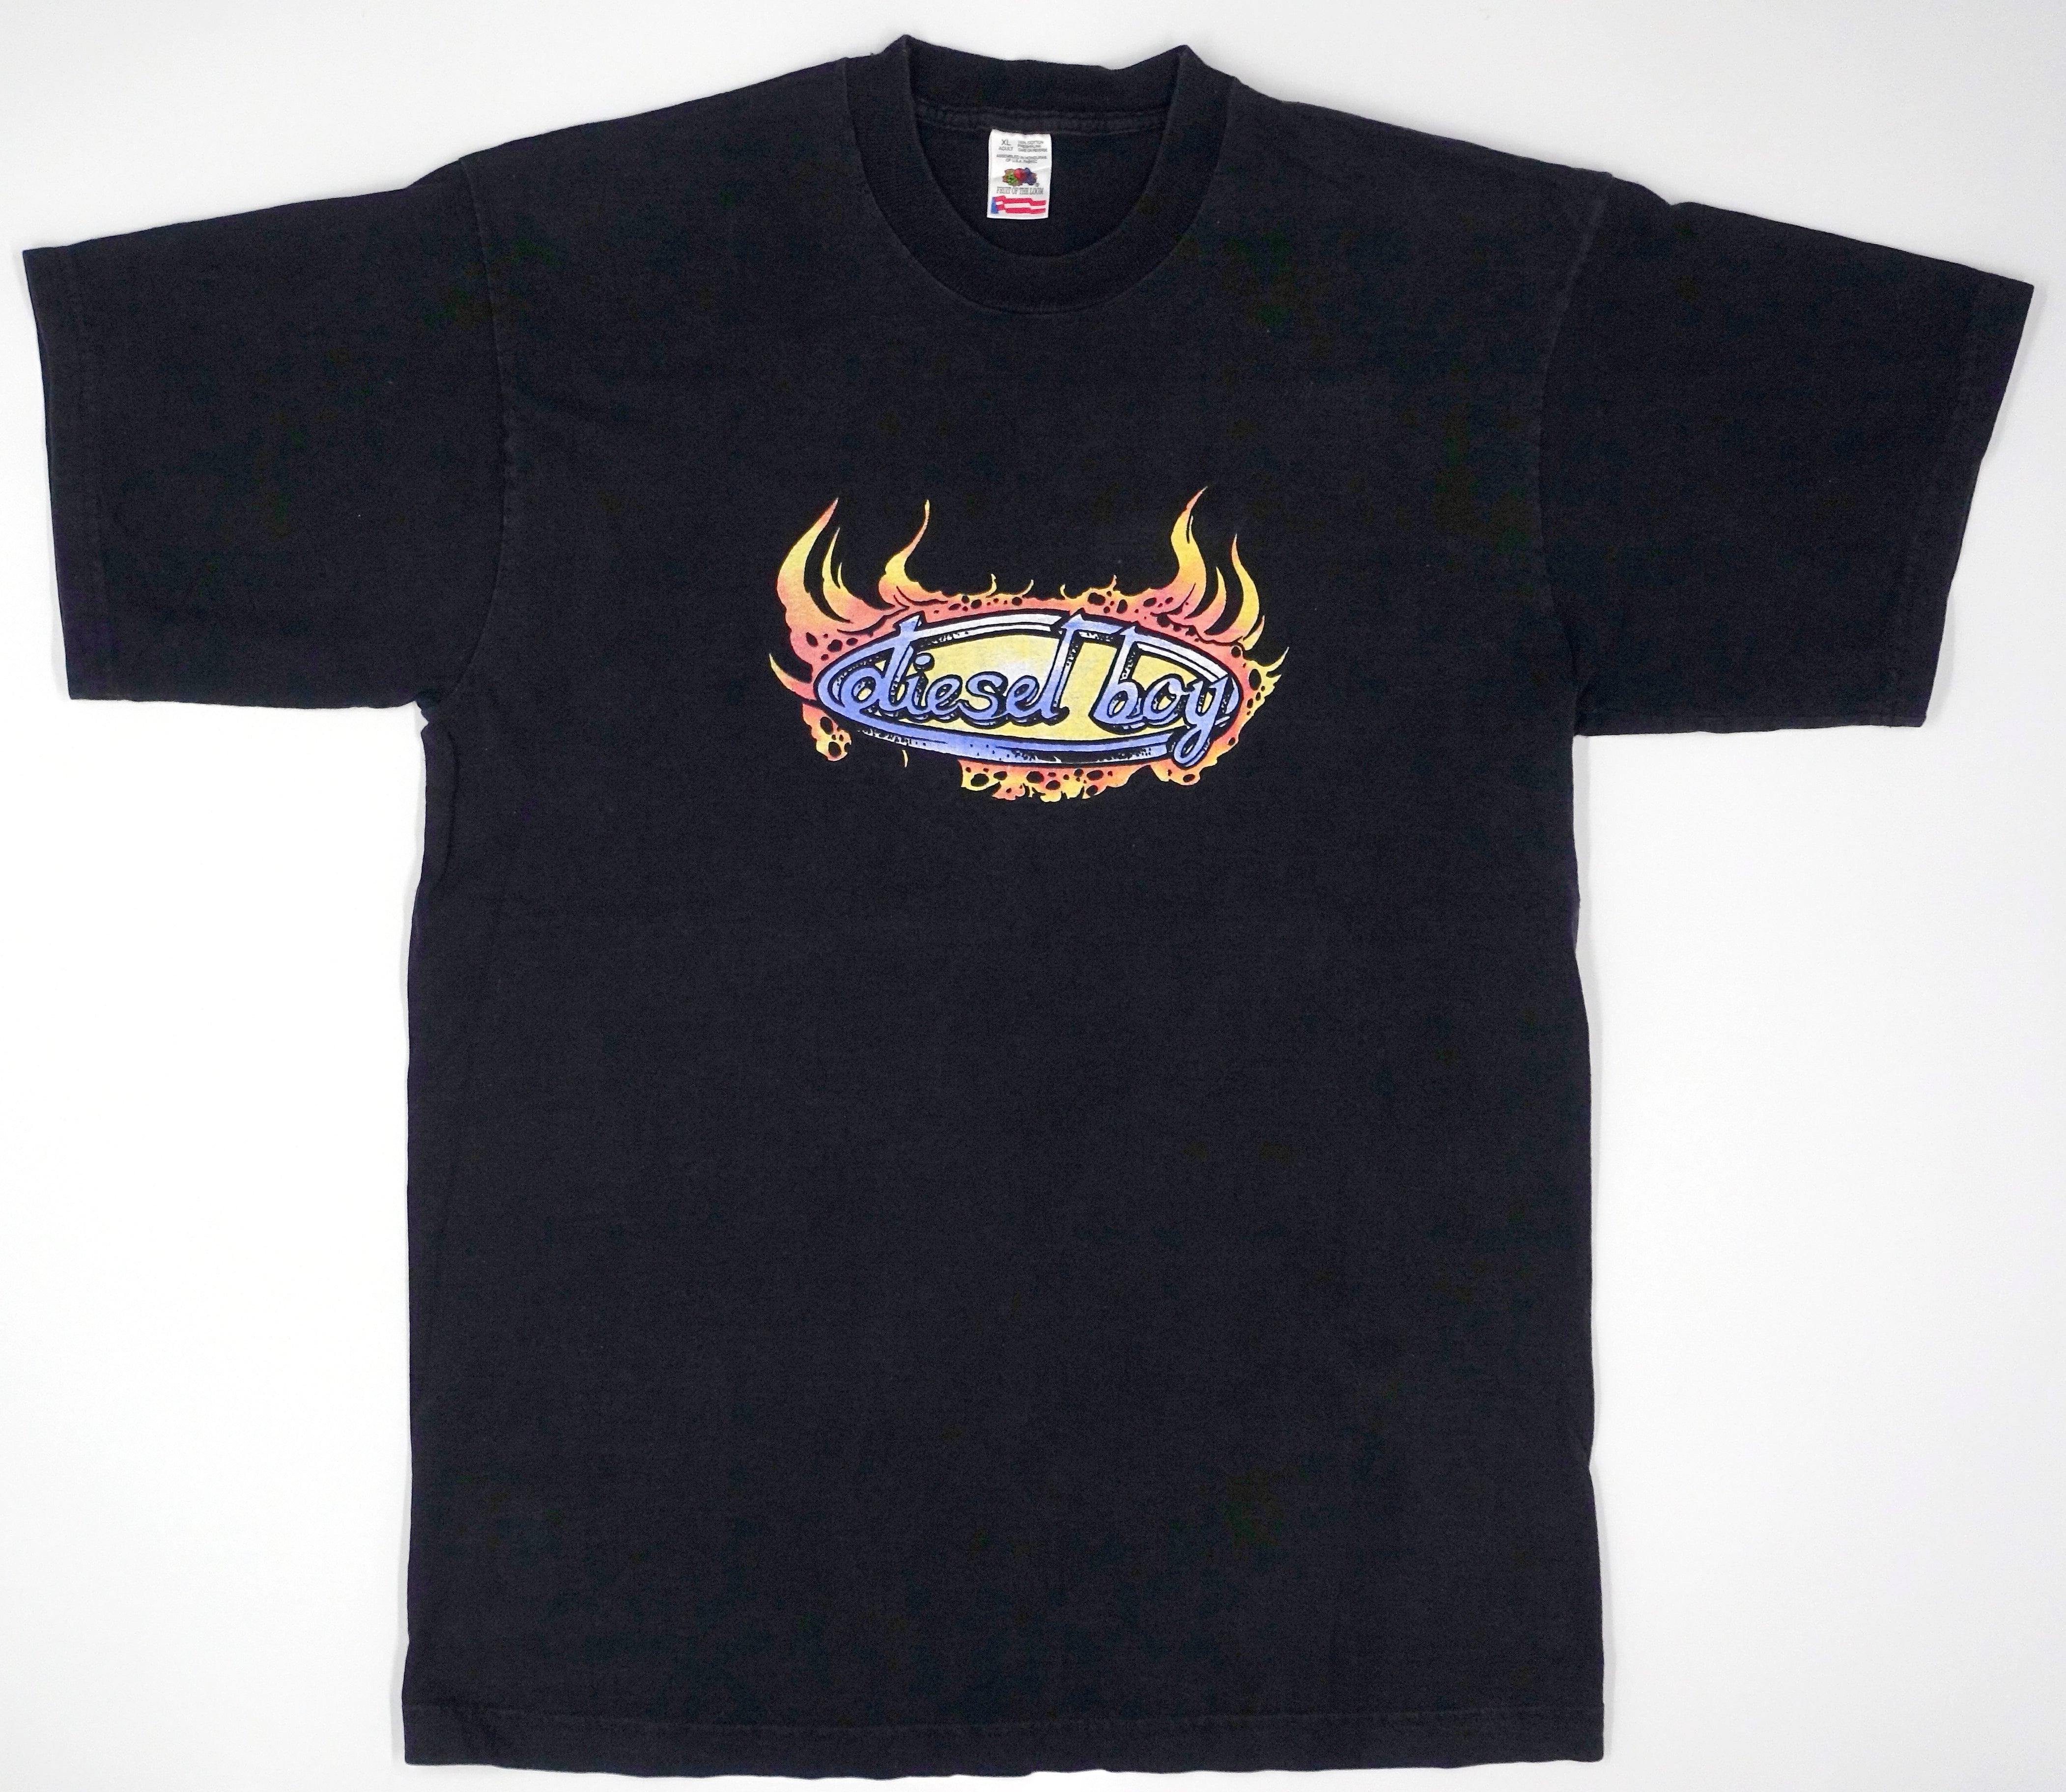 Diesel Boy – Sno Jam III Cock Rock 1997 Canadian Tour Shirt Size XL